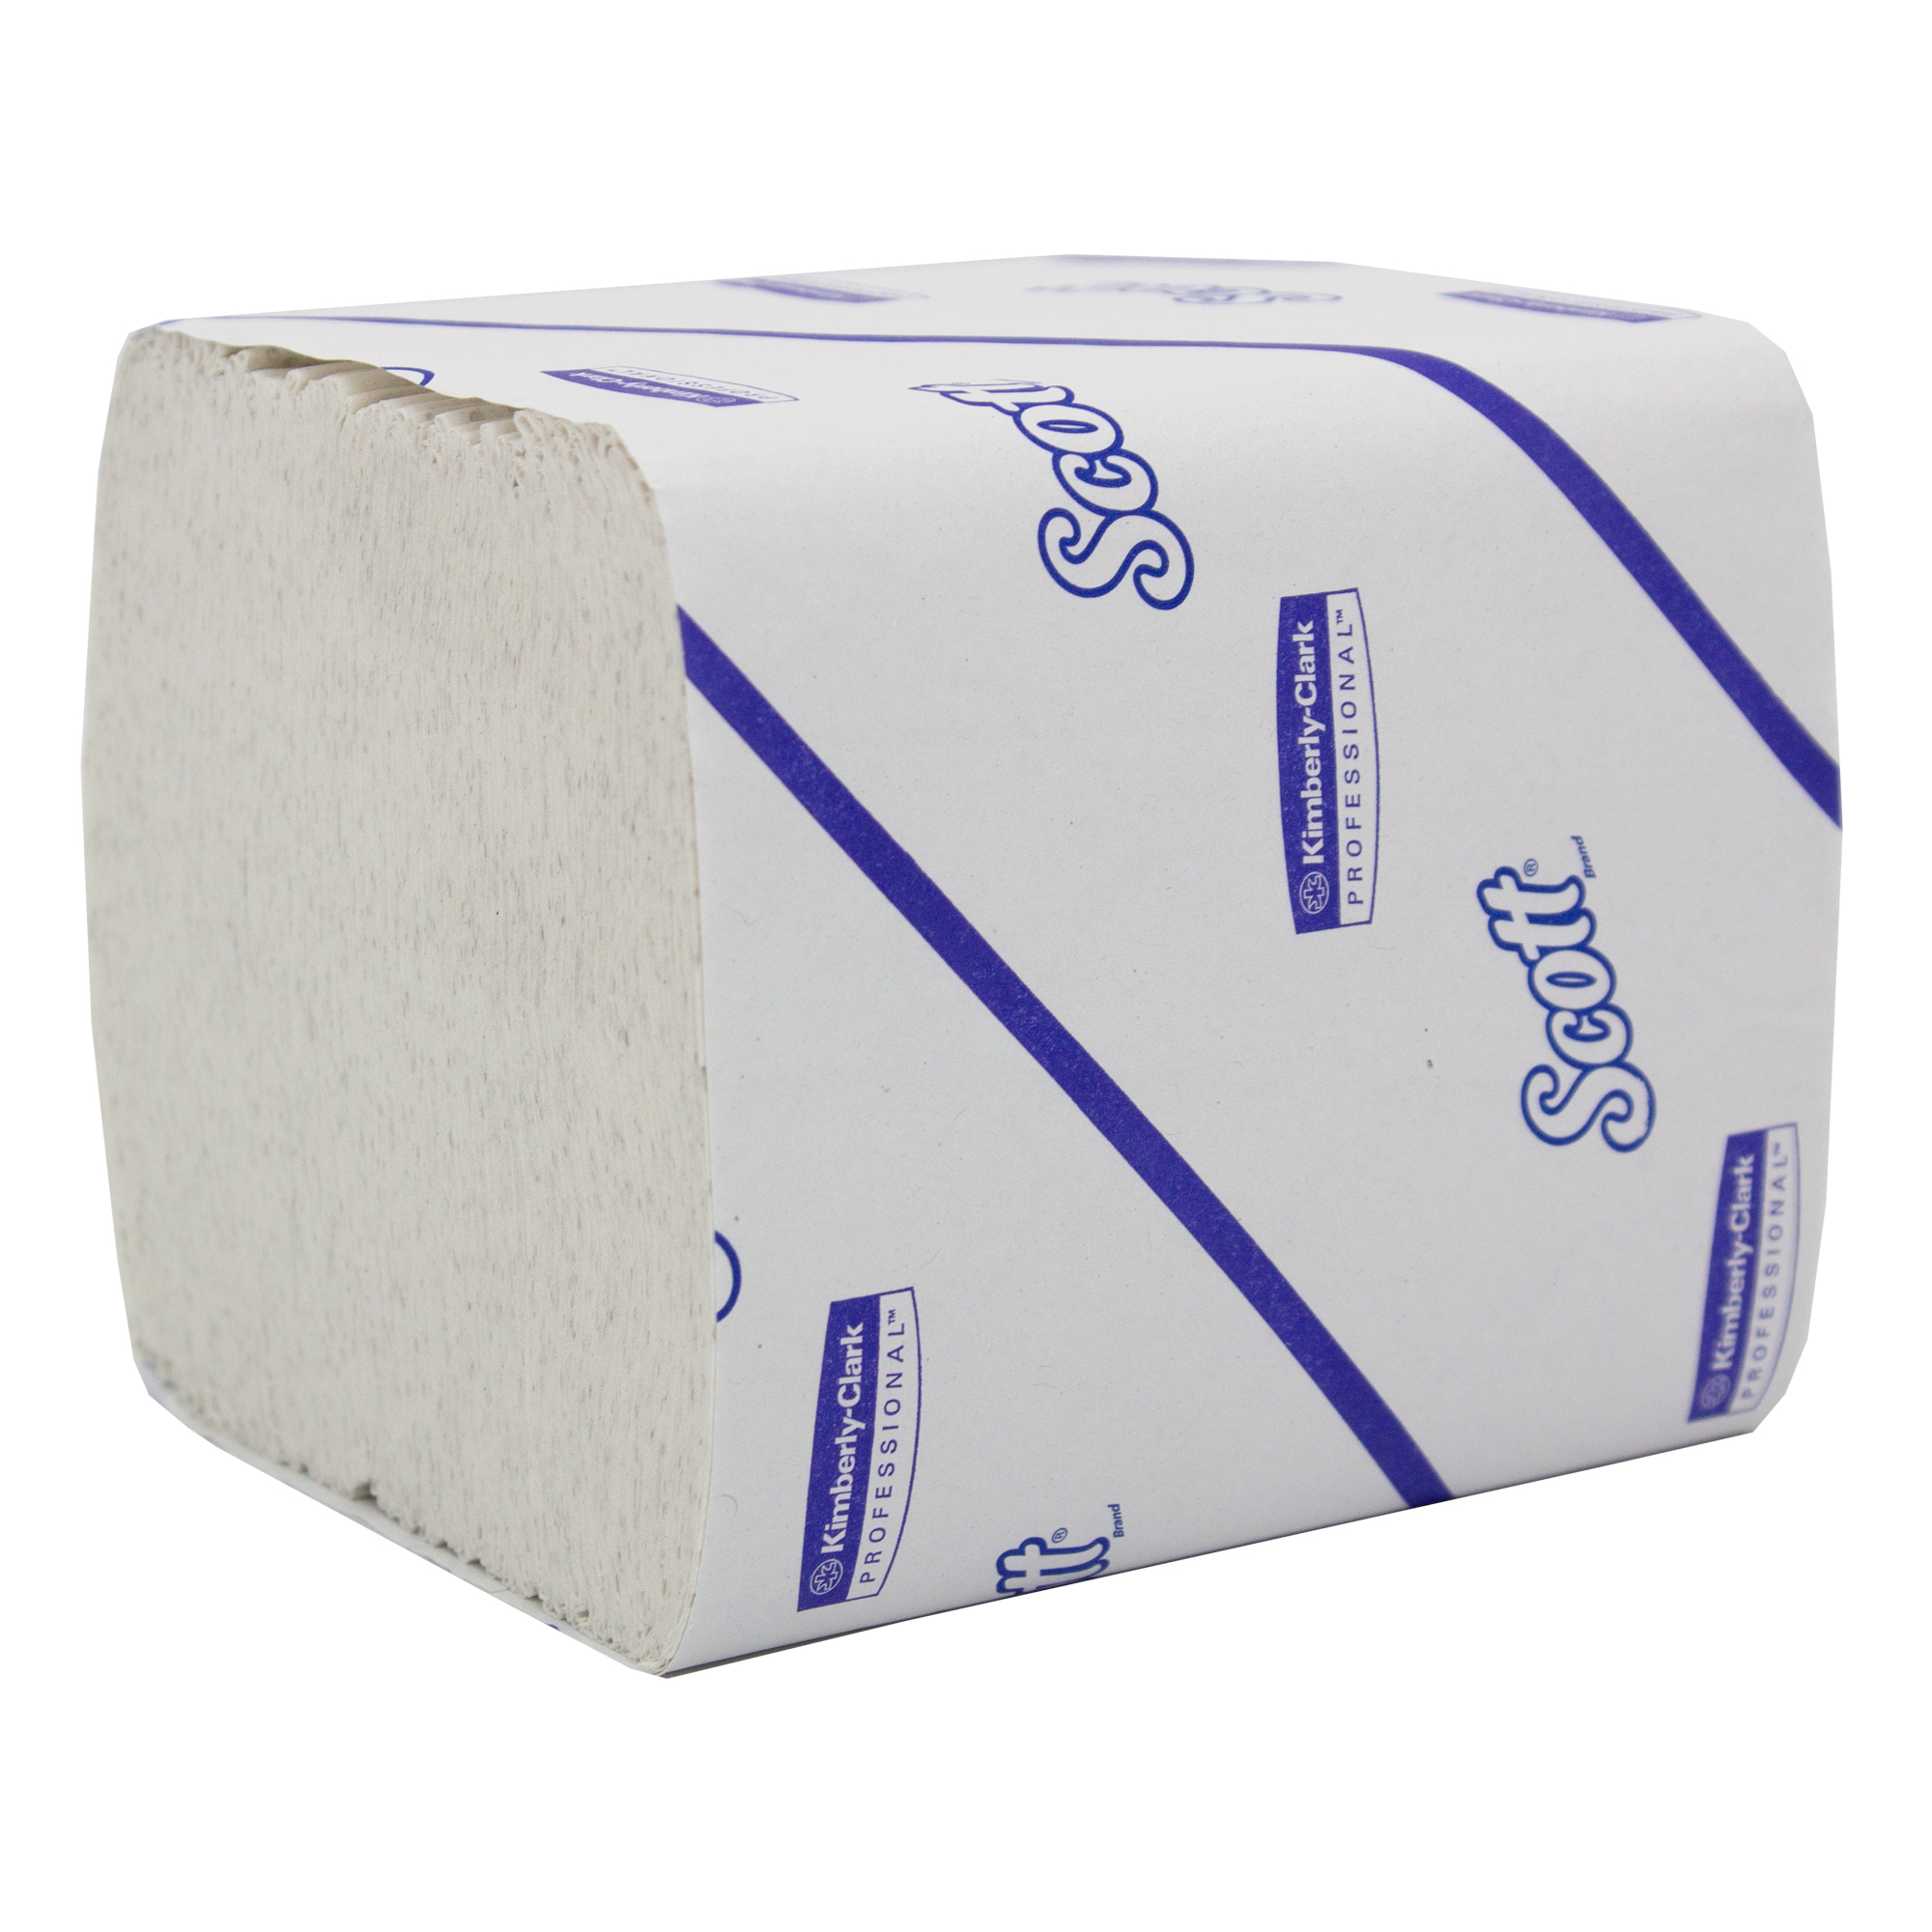 Scott Control 8509 Toilettenpapier Einzelblatt Recycling, weiß, 2-lagig